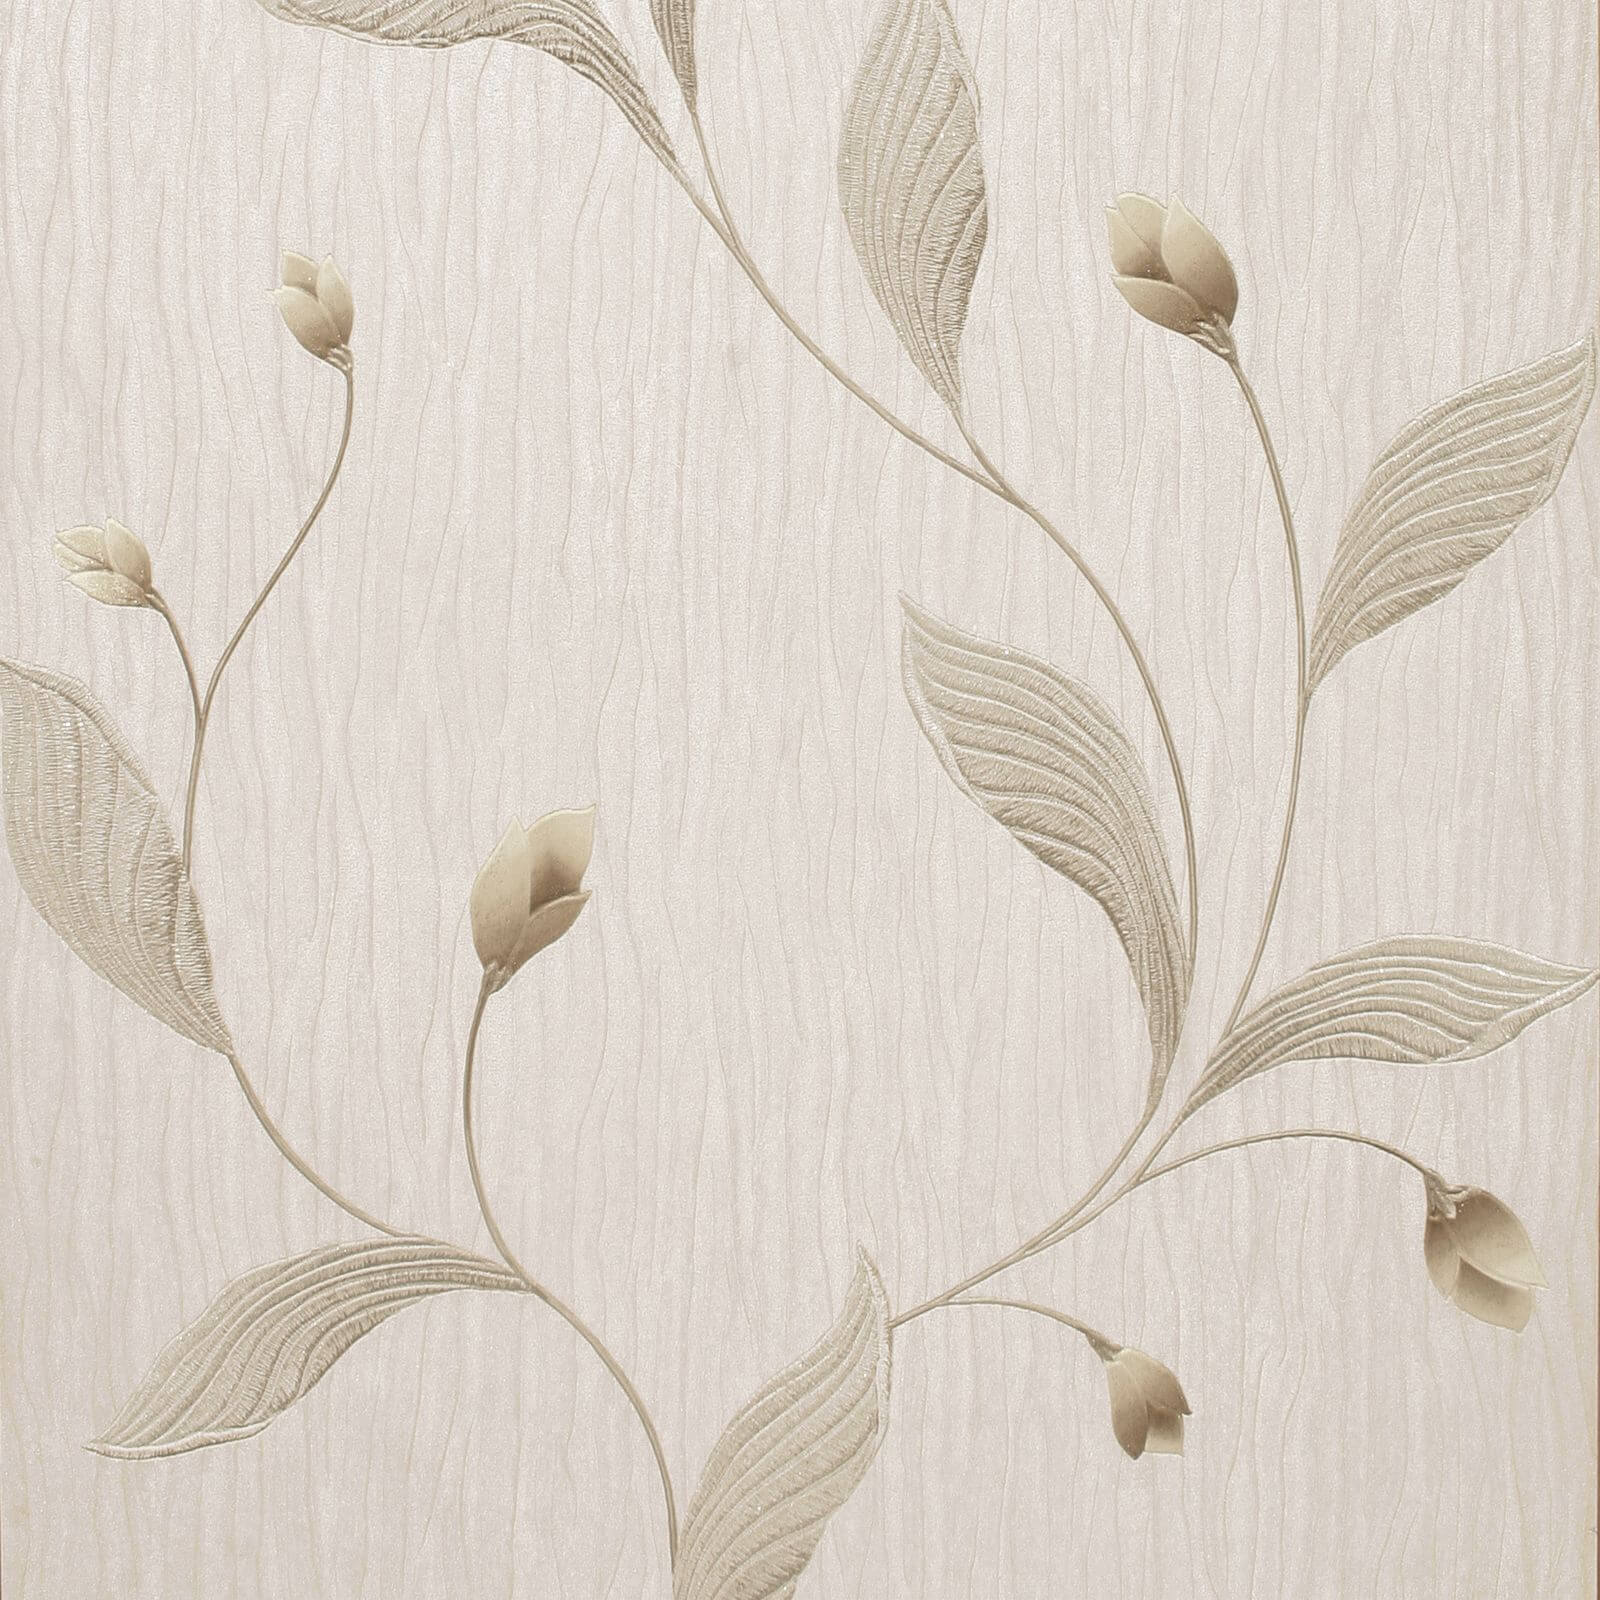 Belgravia Decor Tiffany Floral Textured Metallic Cream Wallpaper